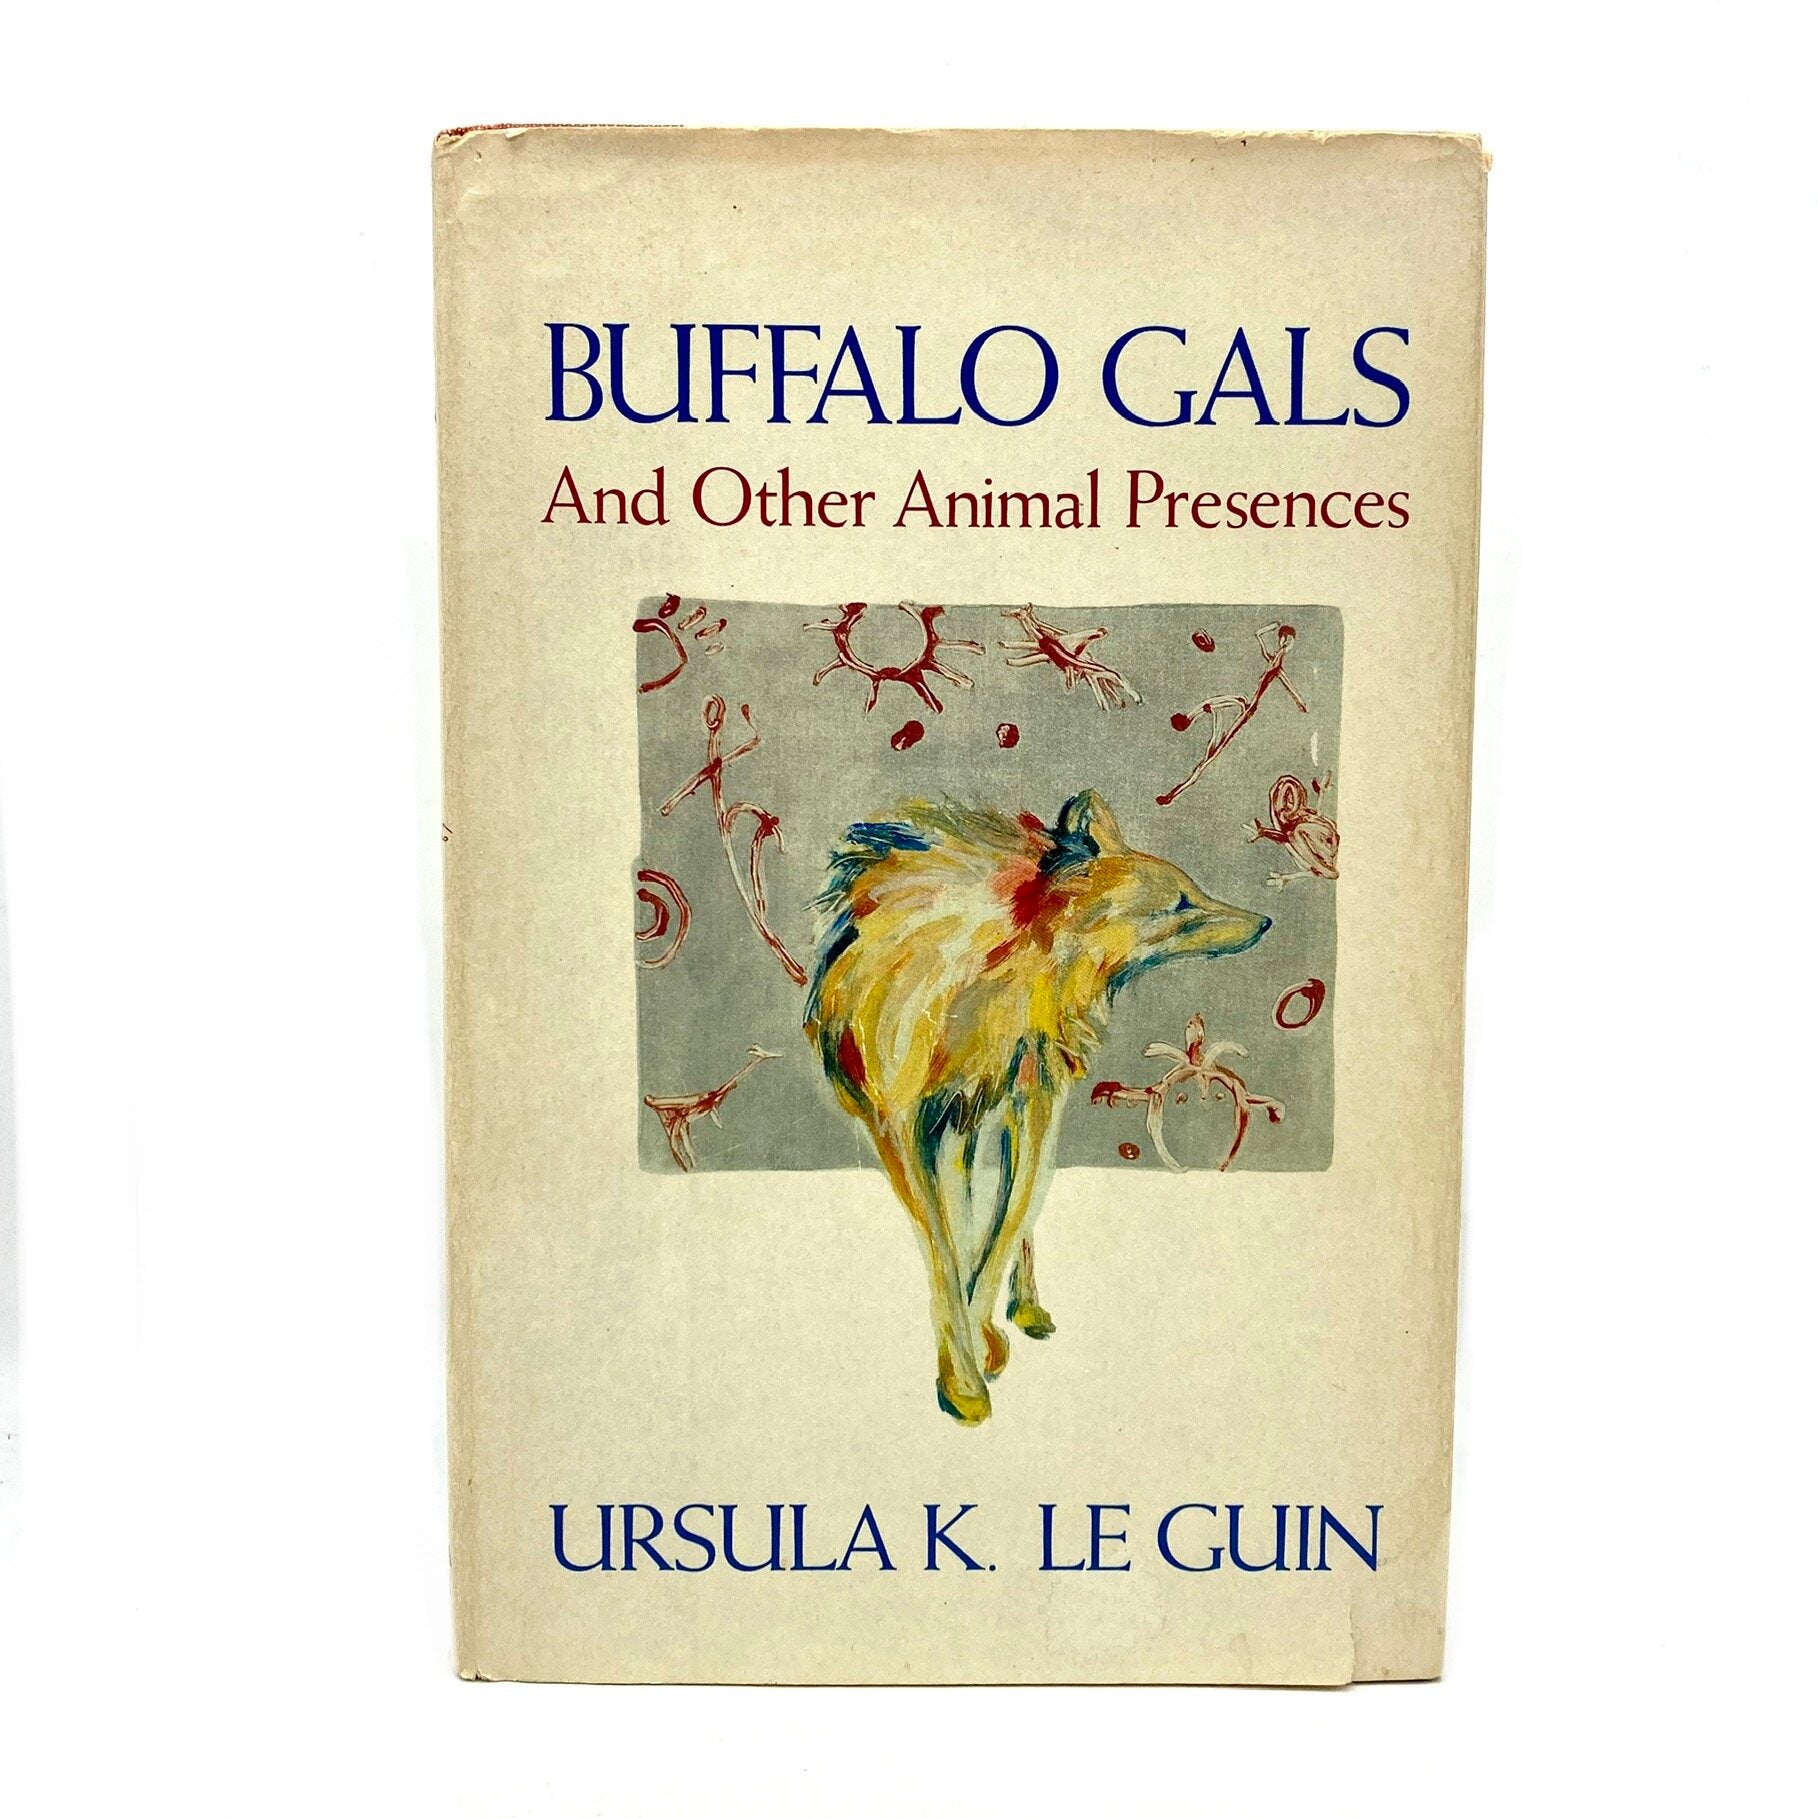 LE GUIN, Ursula "Buffalo Gals and Other Animal Presences" [Capra Press, 1987] - Buzz Bookstore